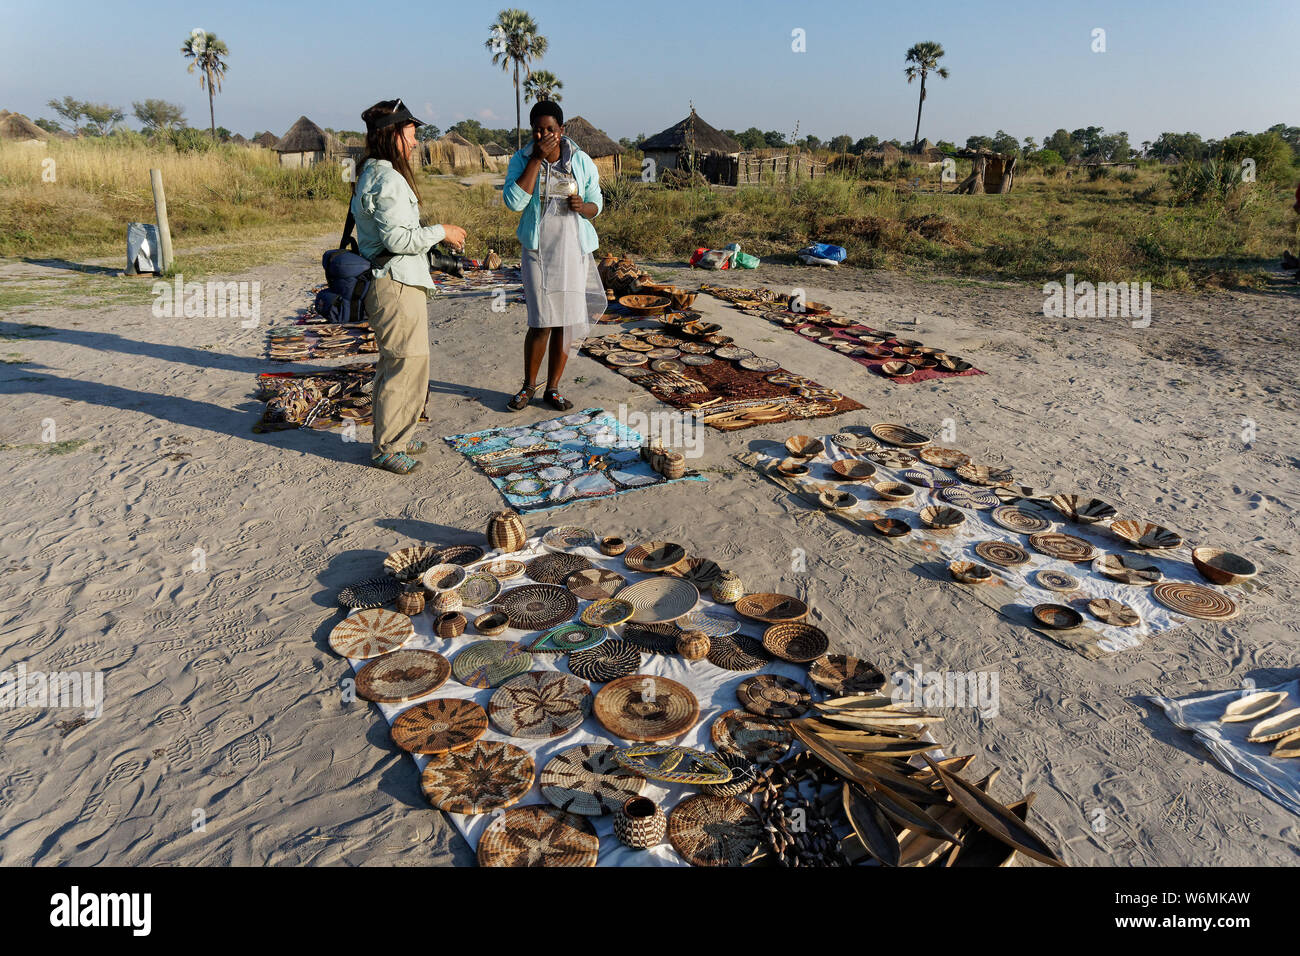 Okavango Delta, Okavango/Botswana - May 30, 2017: A tourist buys some souvenirs at a village basket market. Stock Photo